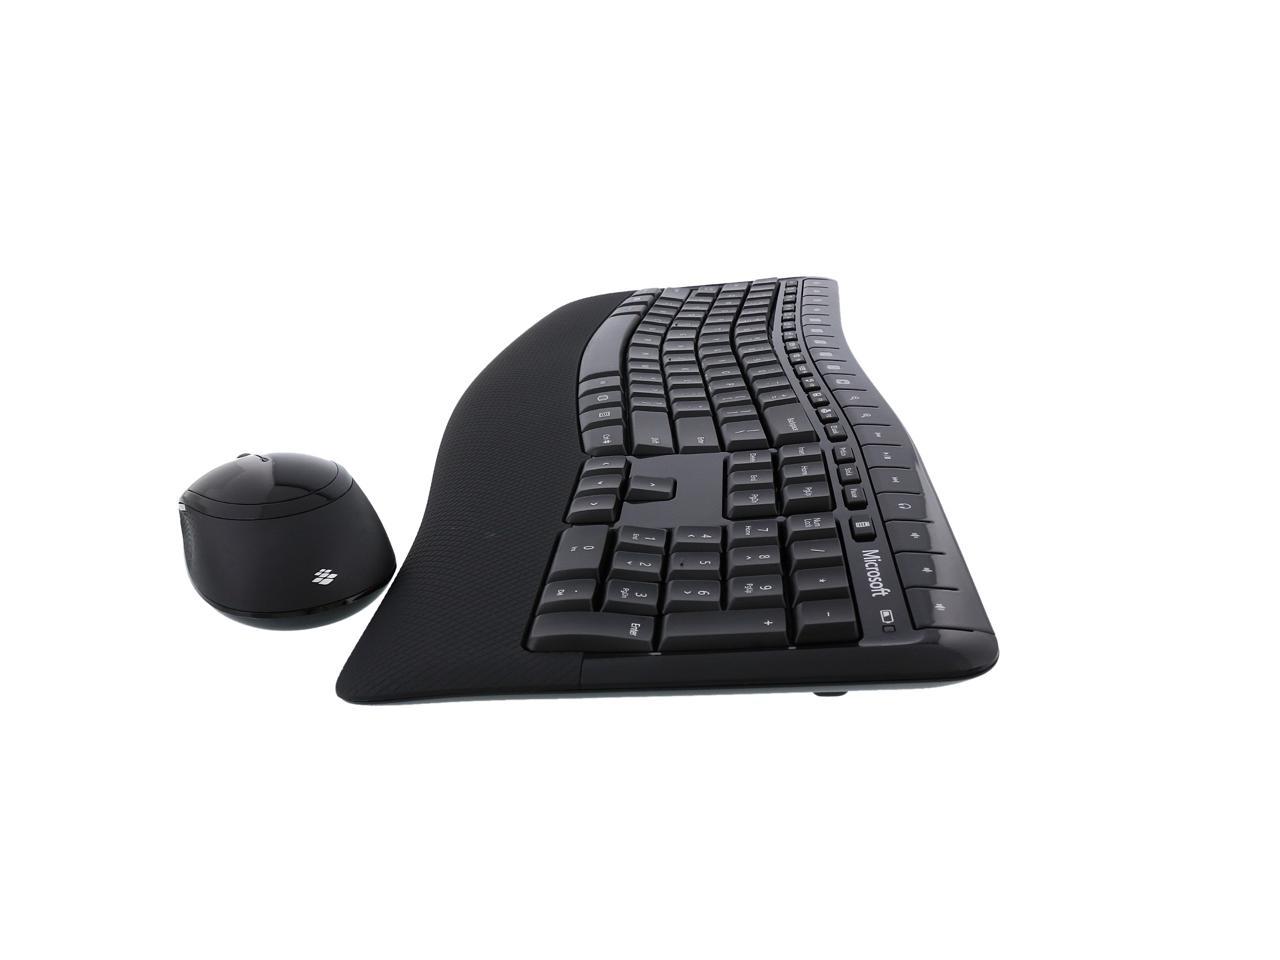 Microsoft Wireless Comfort Desktop 5050 - Black. Wireless, Ergonomic  Keyboard and Mouse Combo. Built-in Palm Rest and Comfort Curve Design.  Customizable Windows Shortcut Keys - Newegg.com